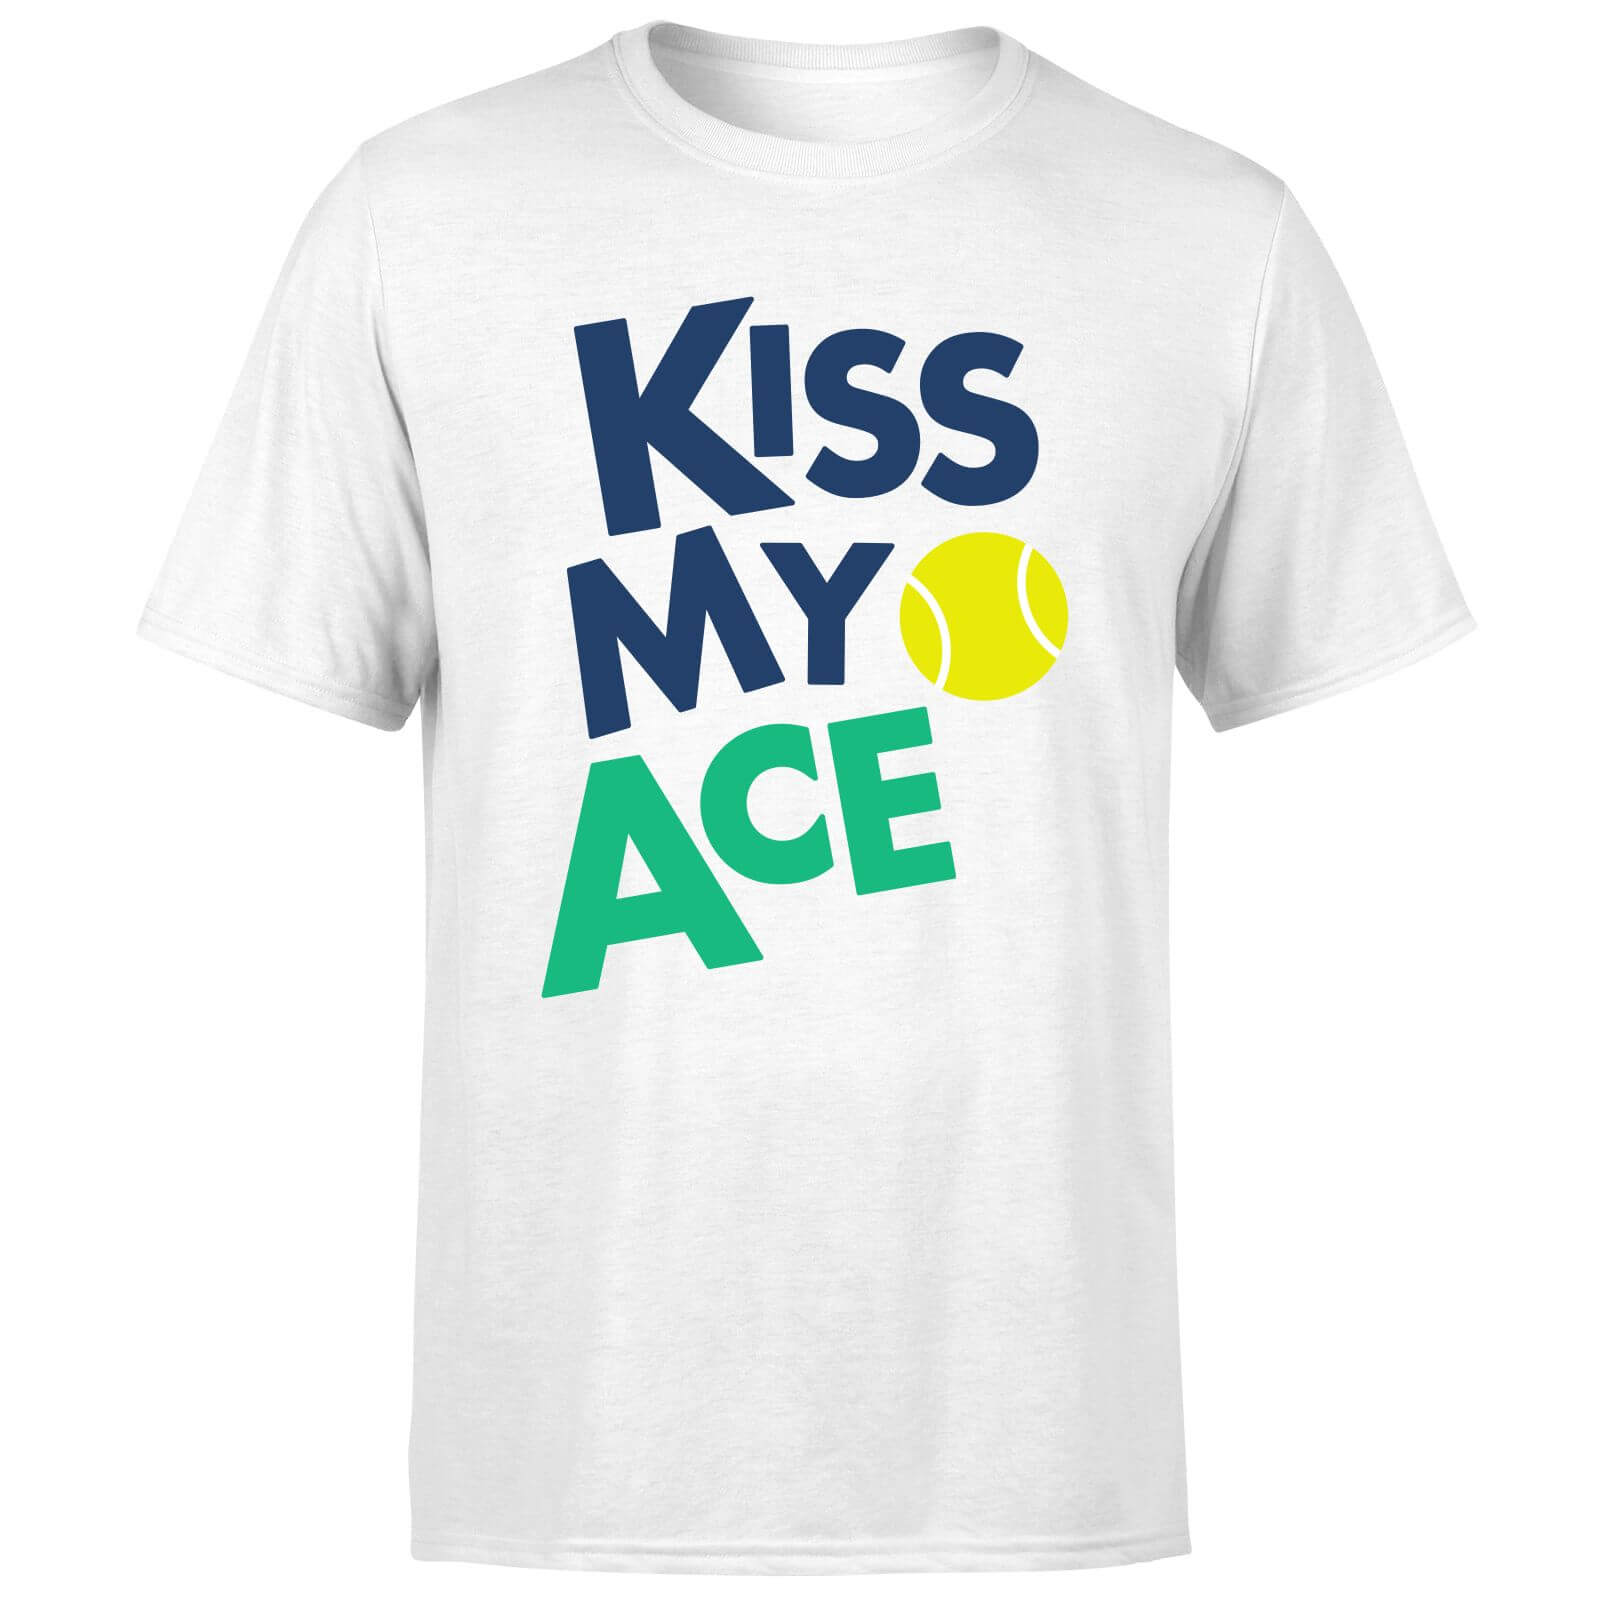 Kiss my Ace T-Shirt - White - XL - White